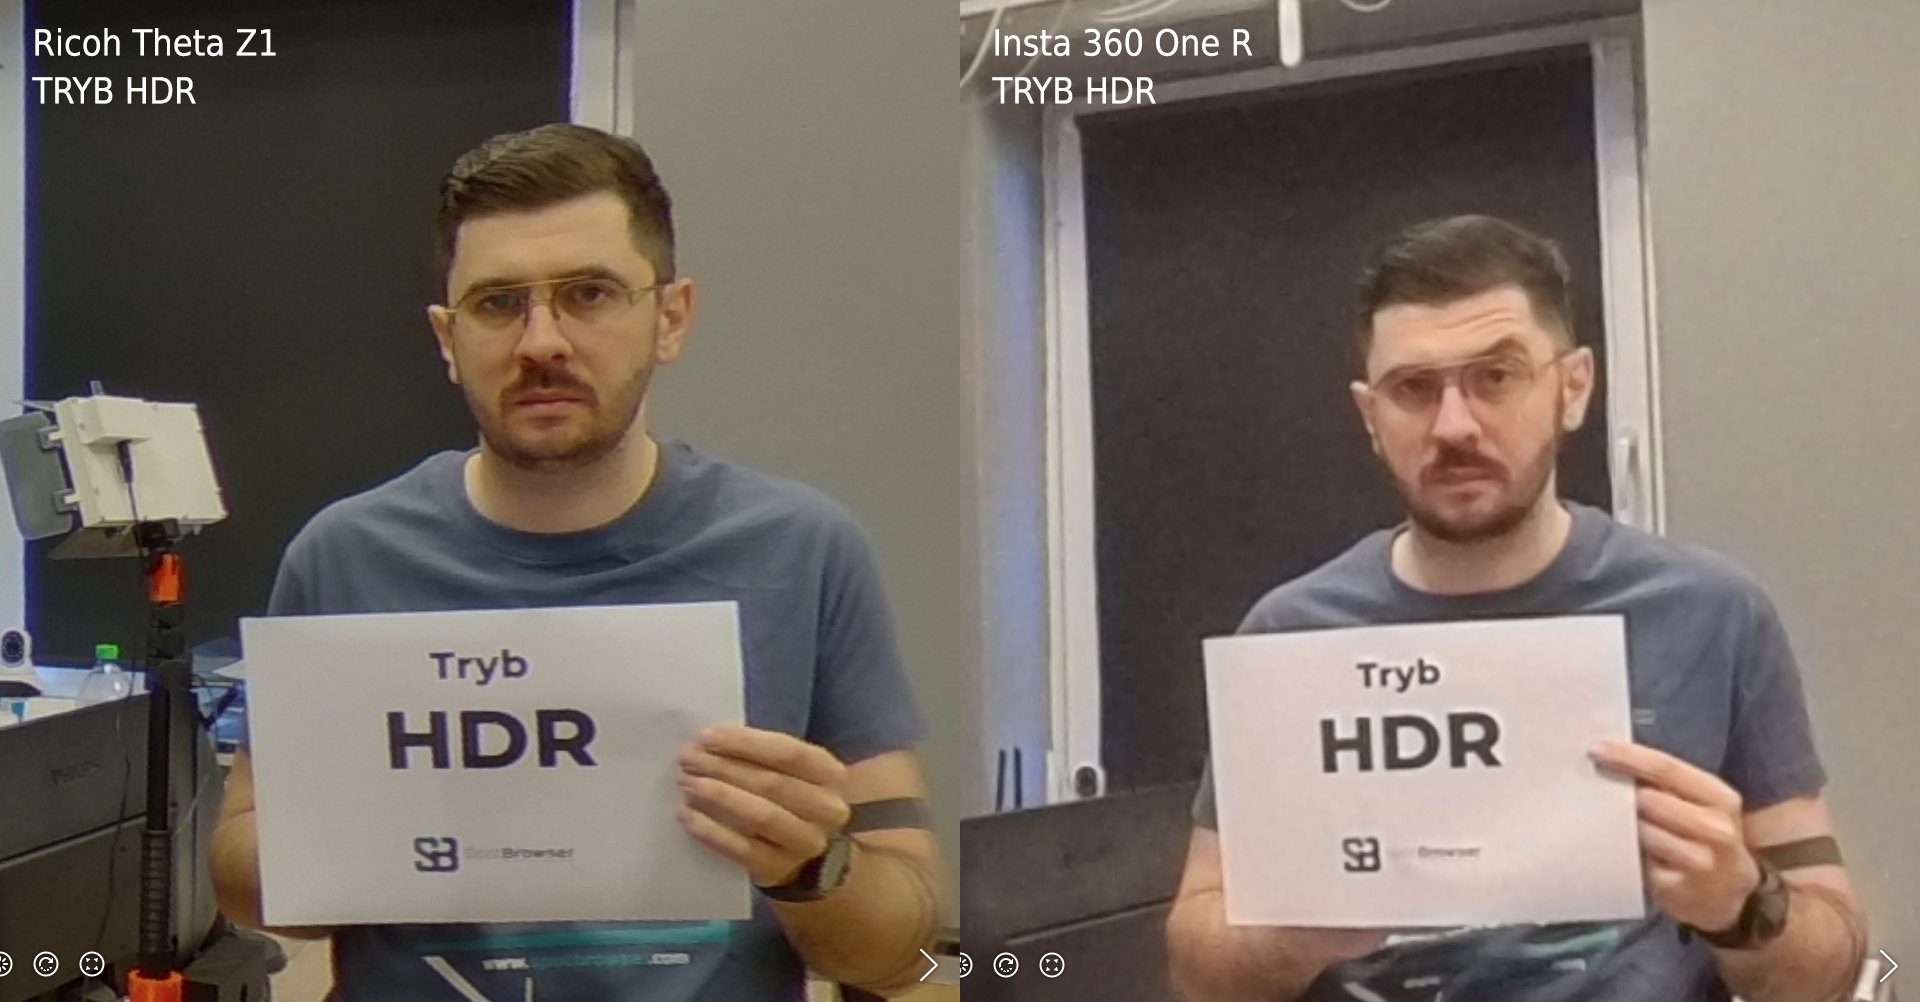 Ricoh Theta Z1 vs Insta 360 One R TRYB HDR